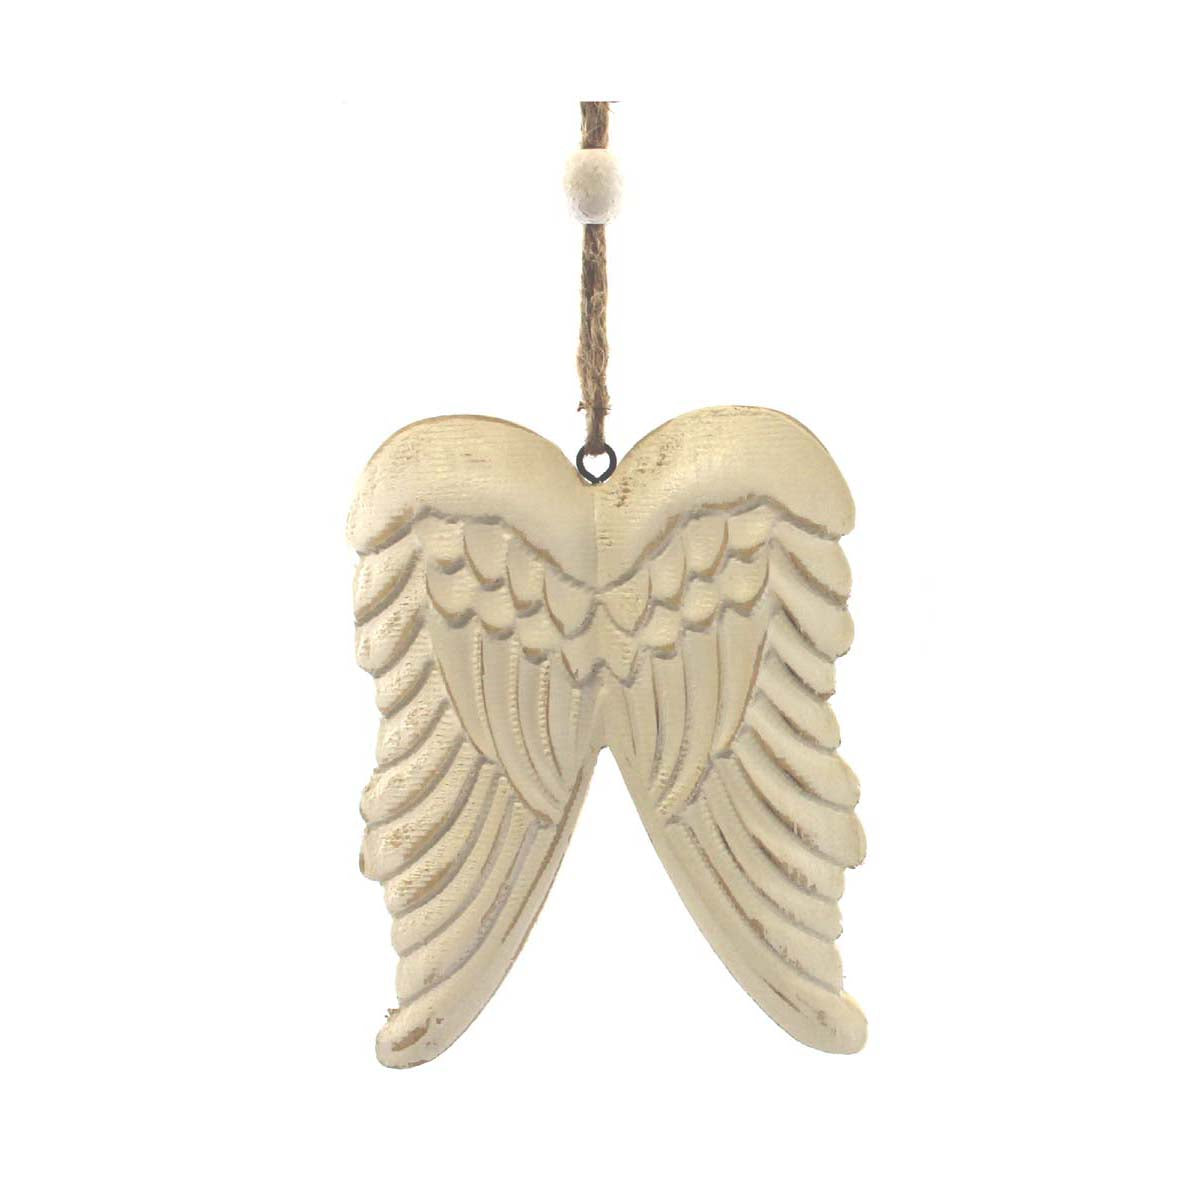 Painted Wood Angel Wings Ornament